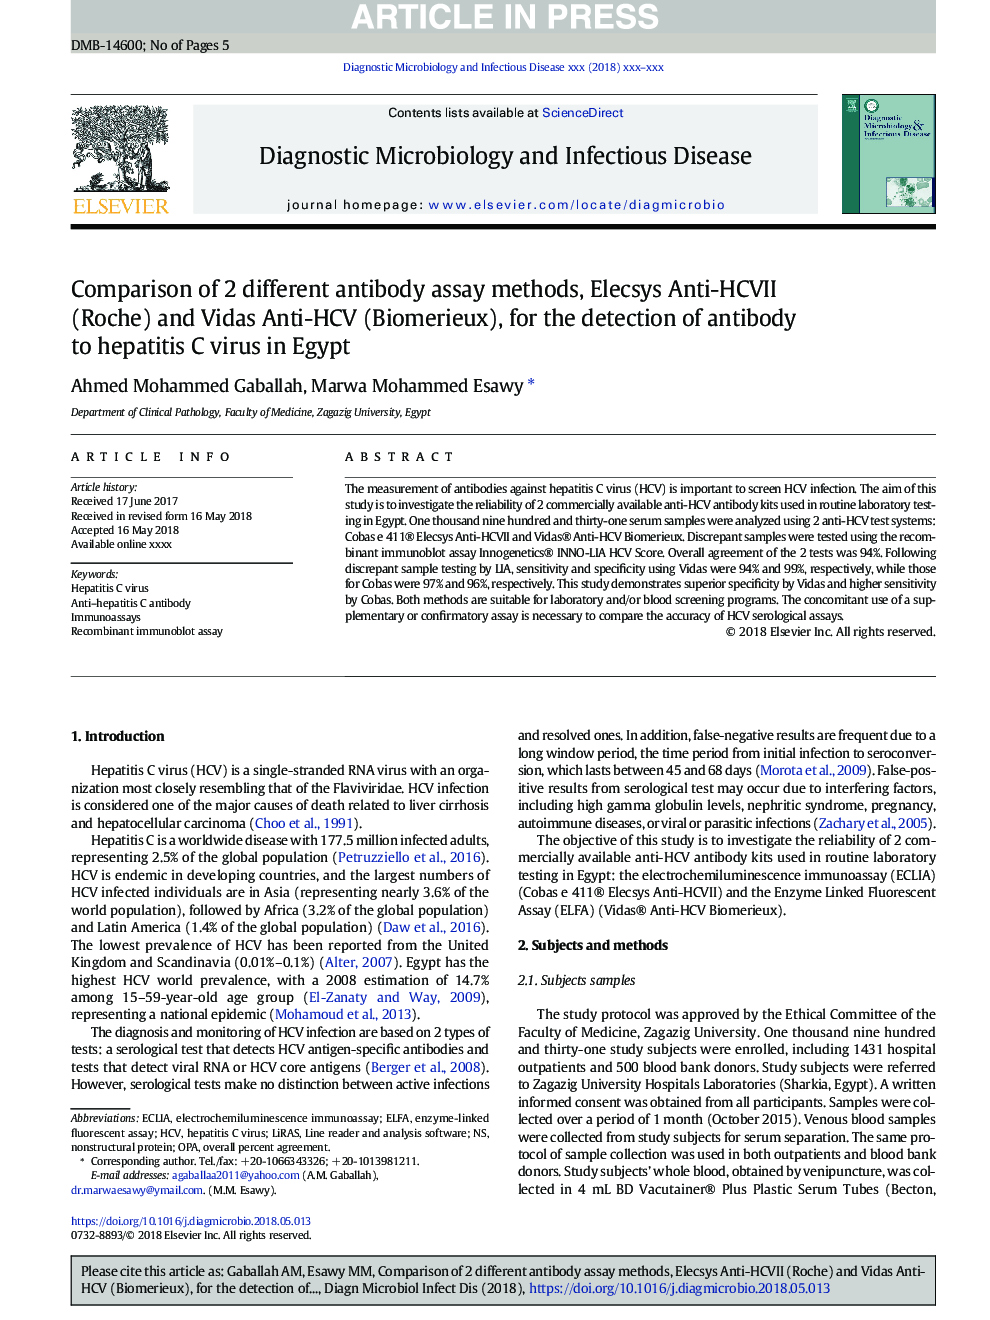 Comparison of 2 different antibody assay methods, Elecsys Anti-HCVII (Roche) and Vidas Anti-HCV (Biomerieux), for the detection of antibody to hepatitis C virus in Egypt